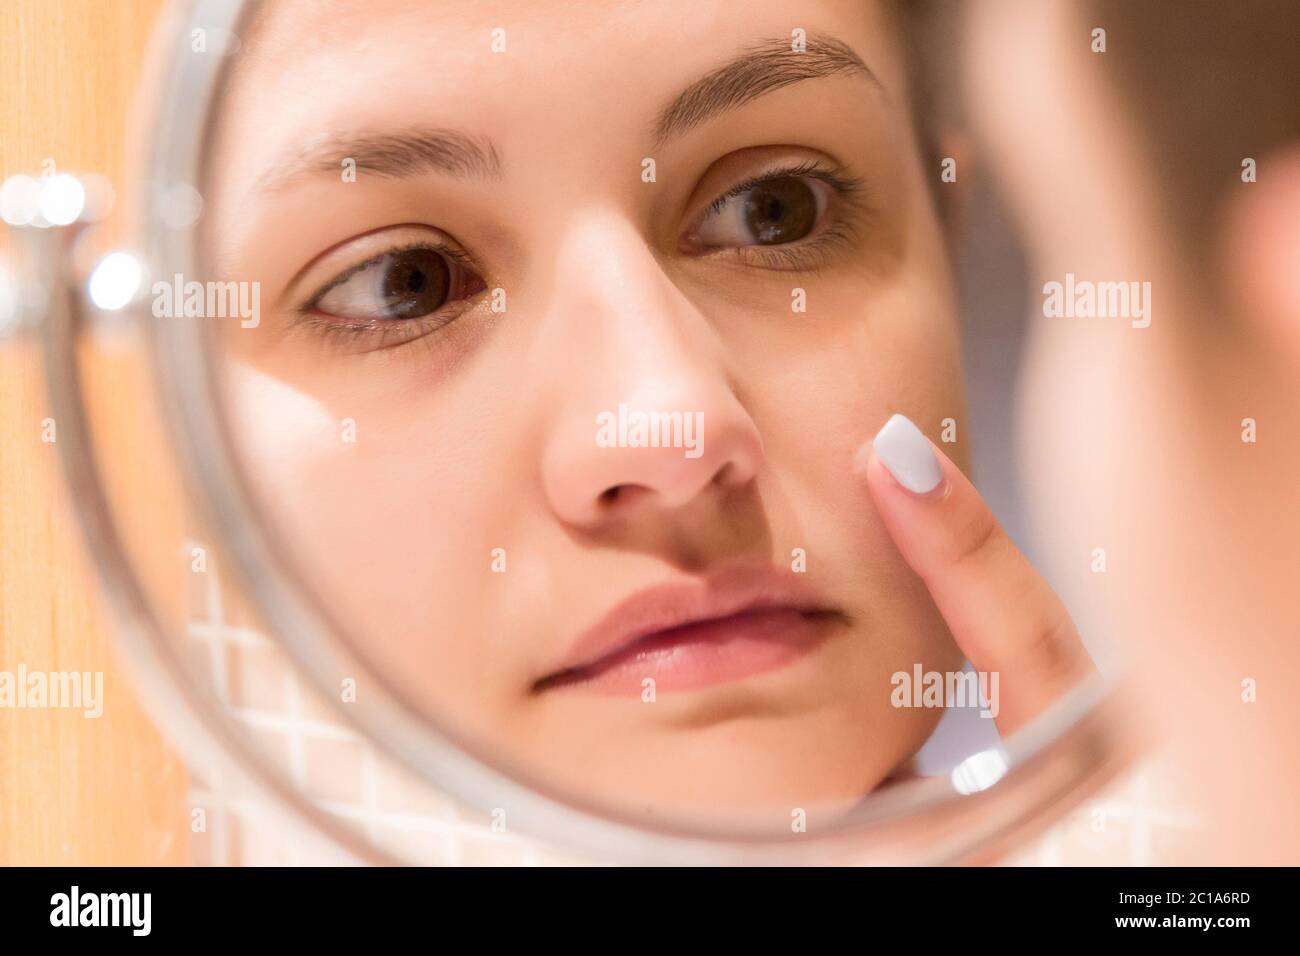 Pimple Acne Immagini E Fotos Stock Alamy